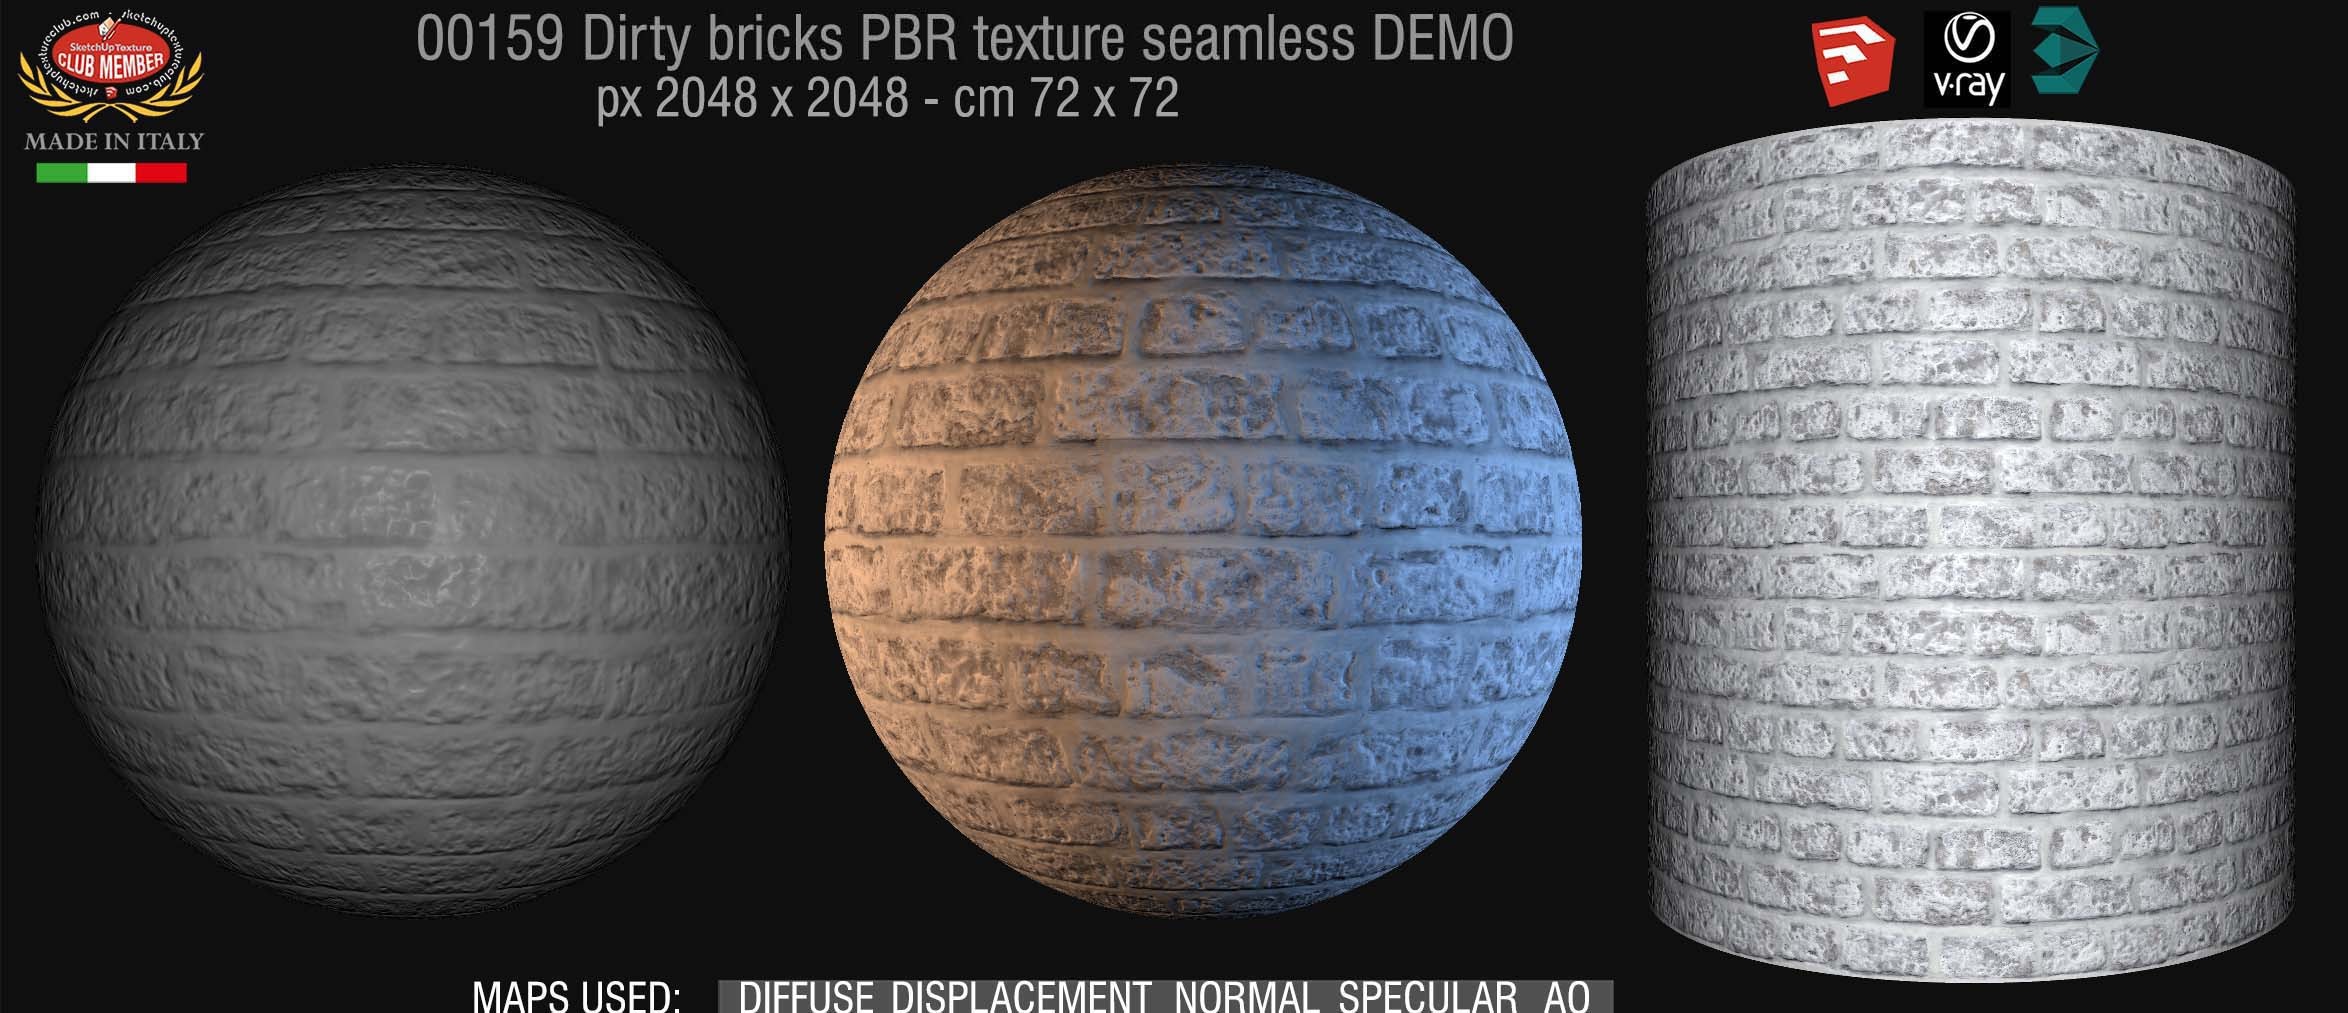 00159 Dirty bricks PBR texture seamless DEMO